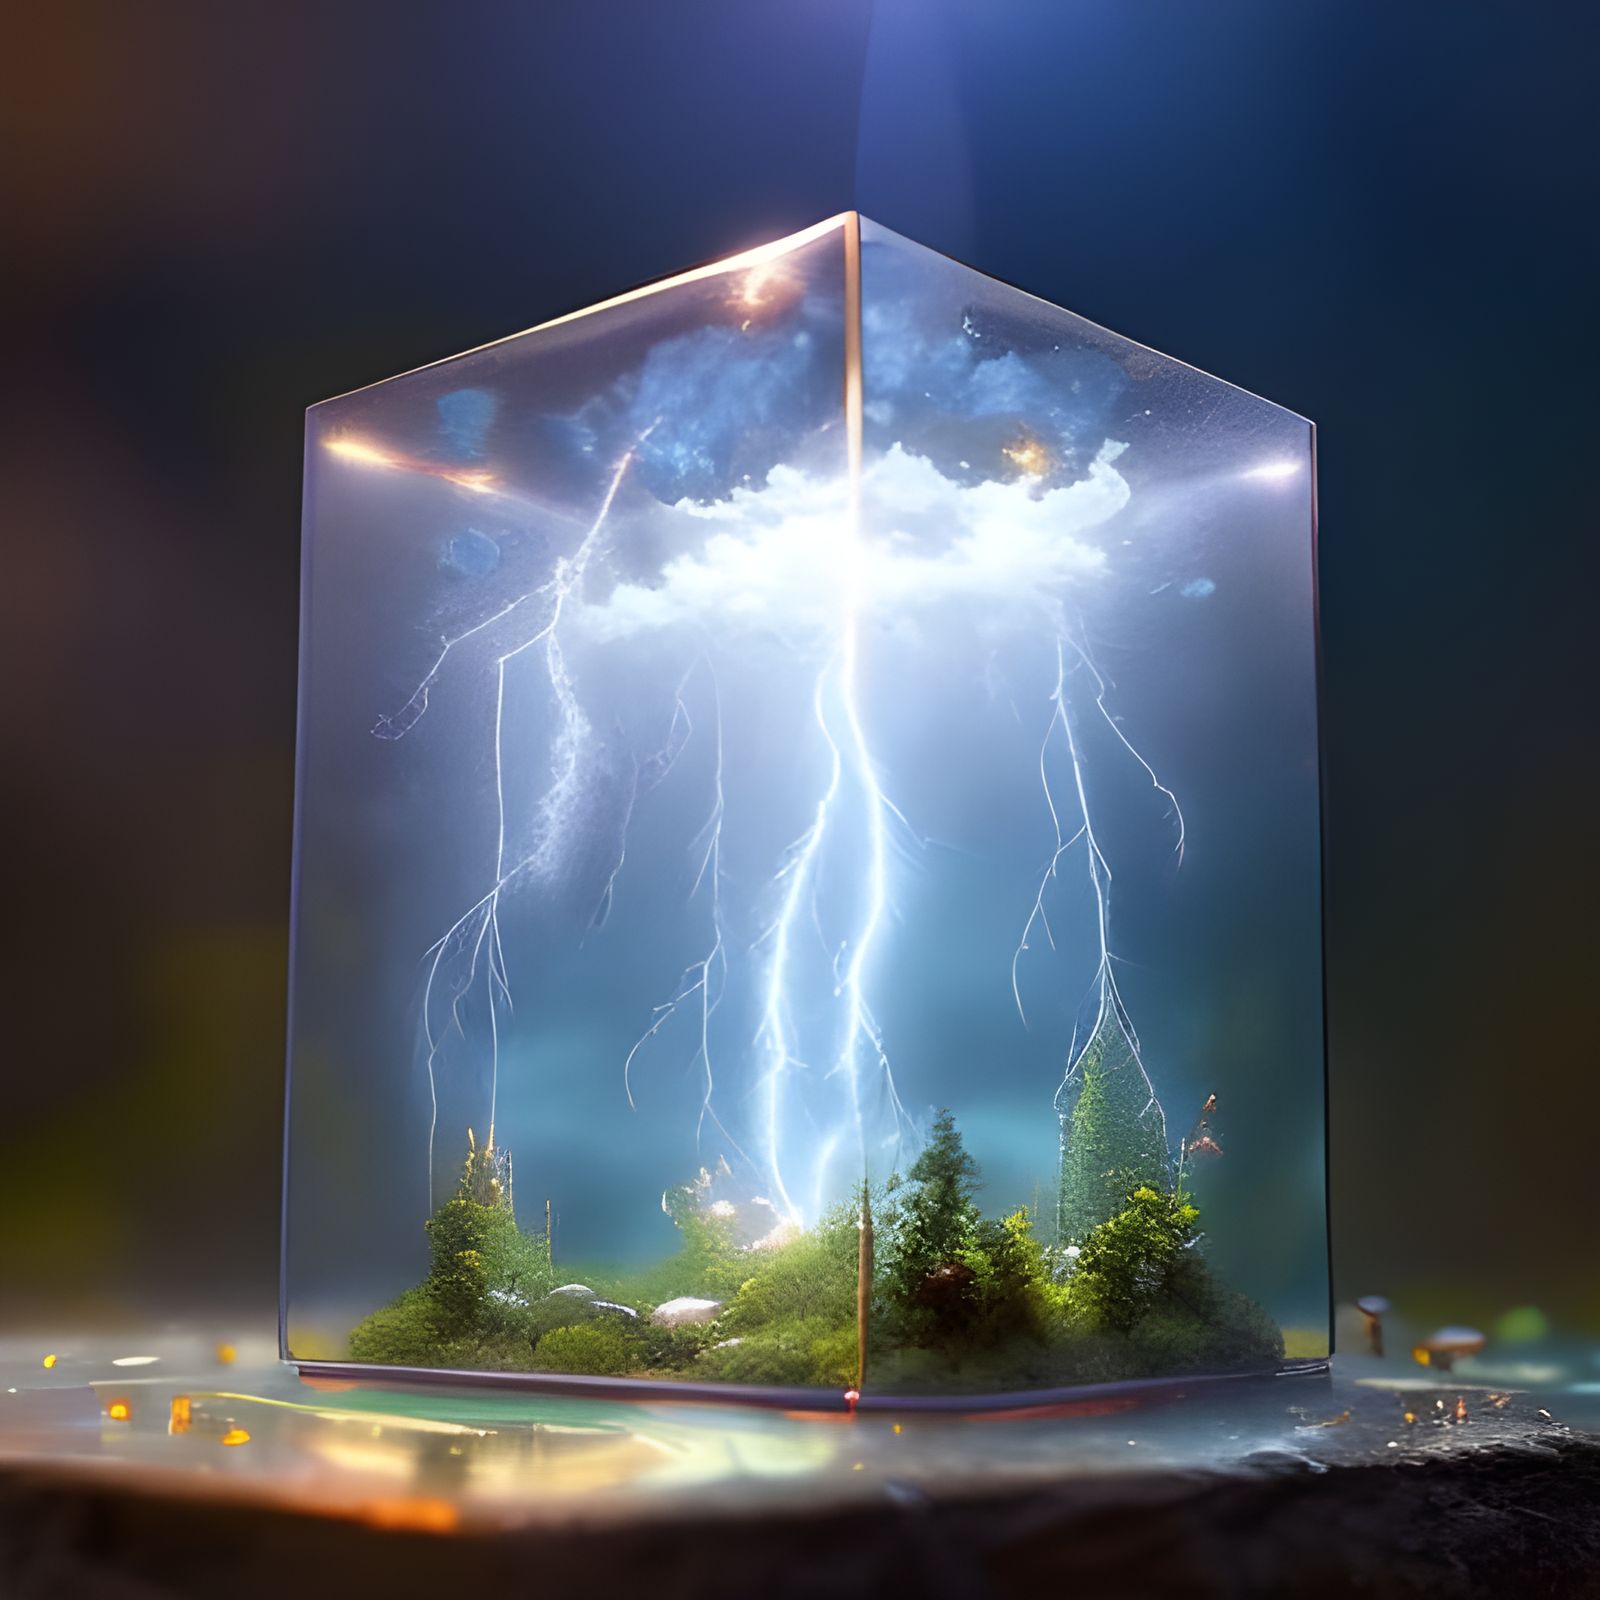 Electric Experiments Final - Perpetual Storm Cube